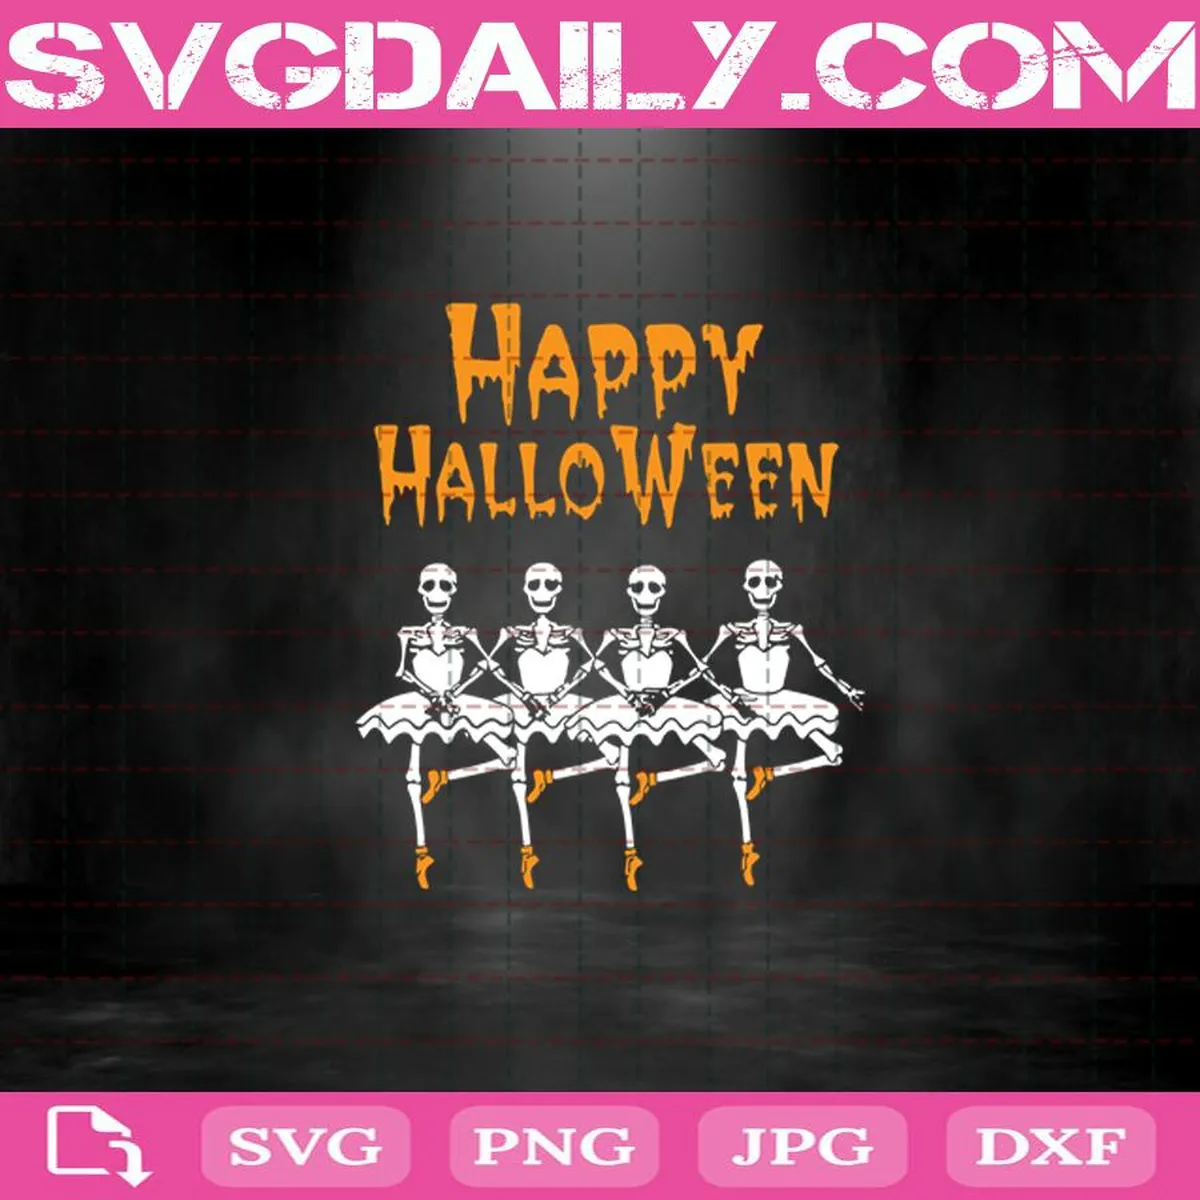 Happy Halloween Dancing Skeletons Svg, Halloween Svg, Happy Halloween Svg, Dancing Skeletons Svg, Skeletons Svg